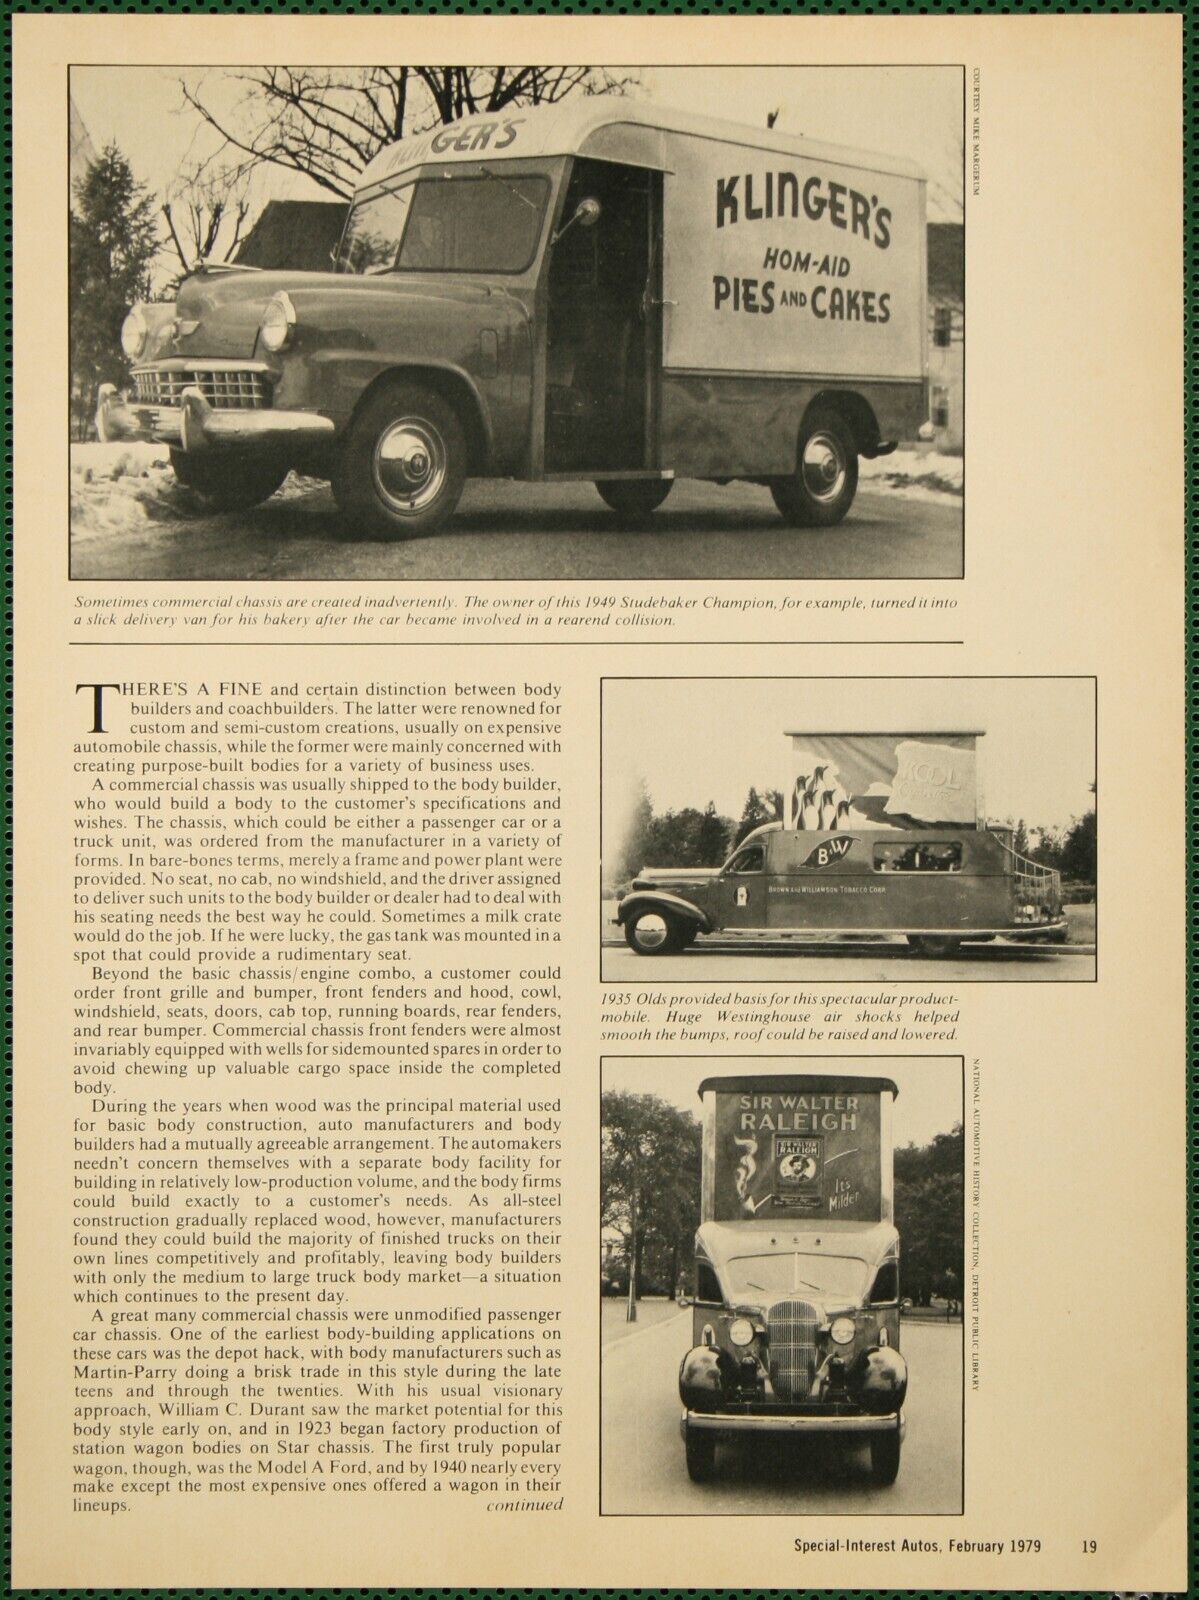 Coachbuilt Commercial Delivery Taxi Ambulance Vintage Pictorial Article 1979